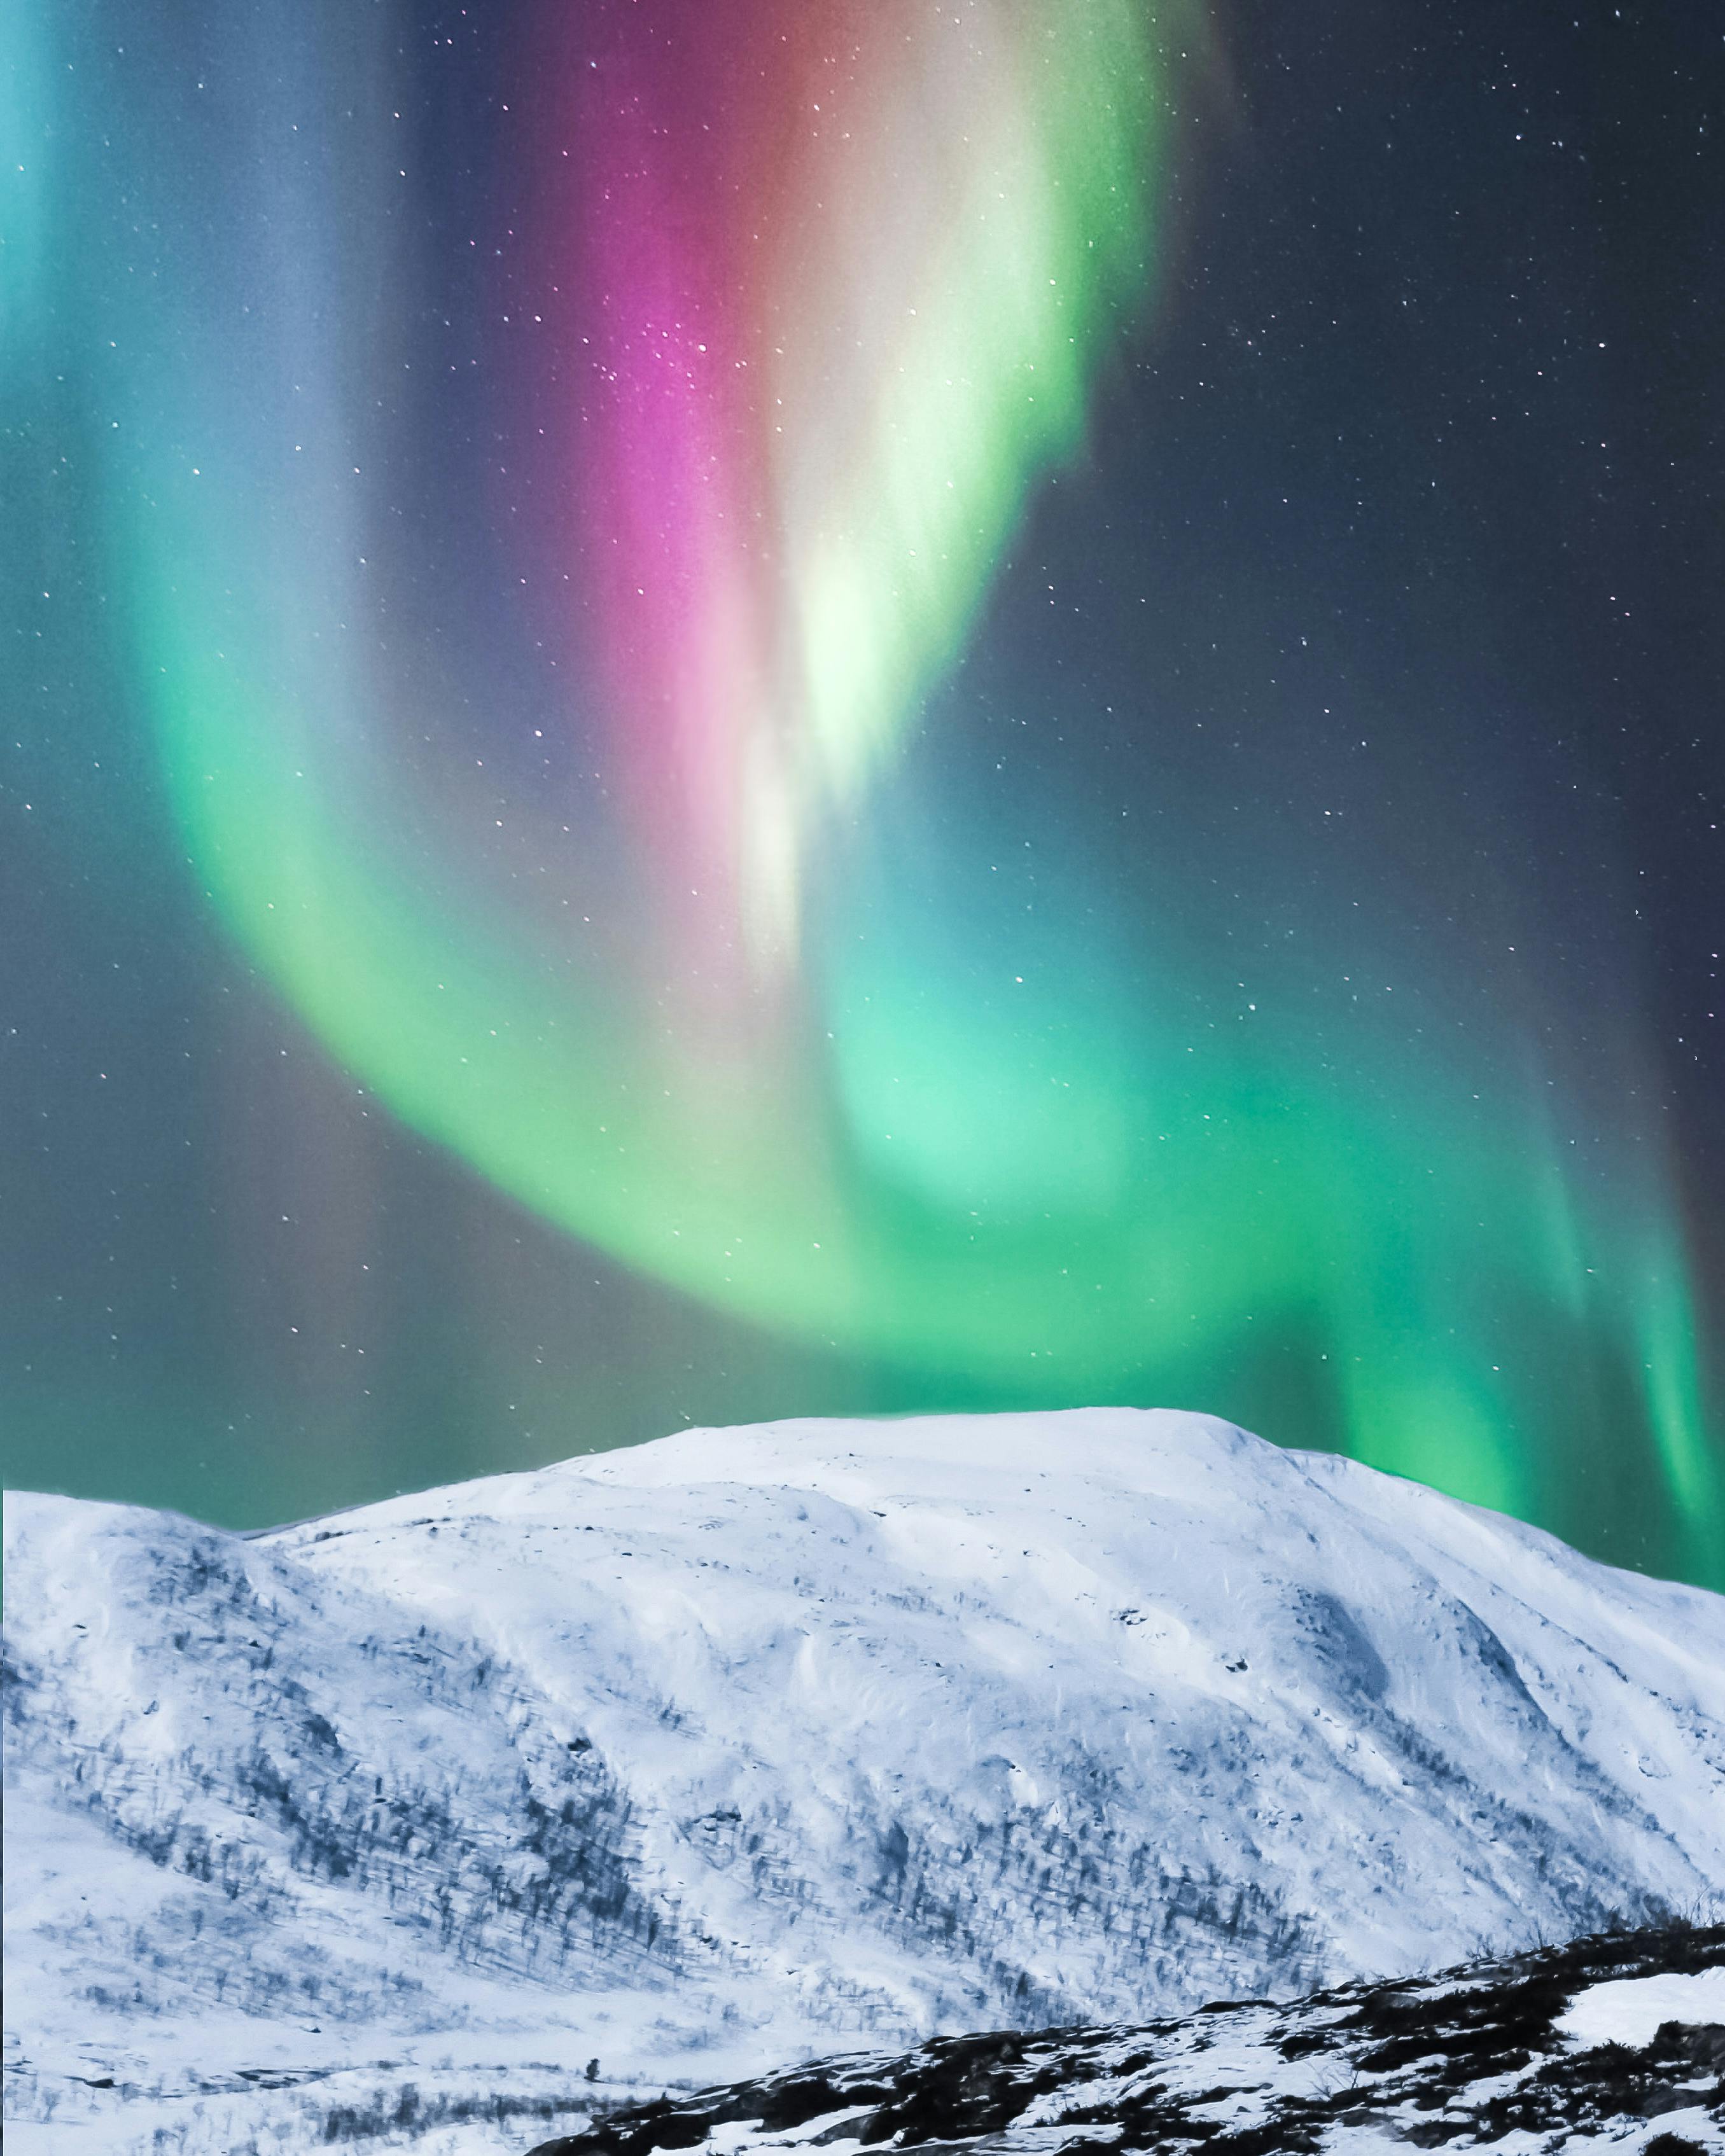 Colorful polar lights over snowy mountain